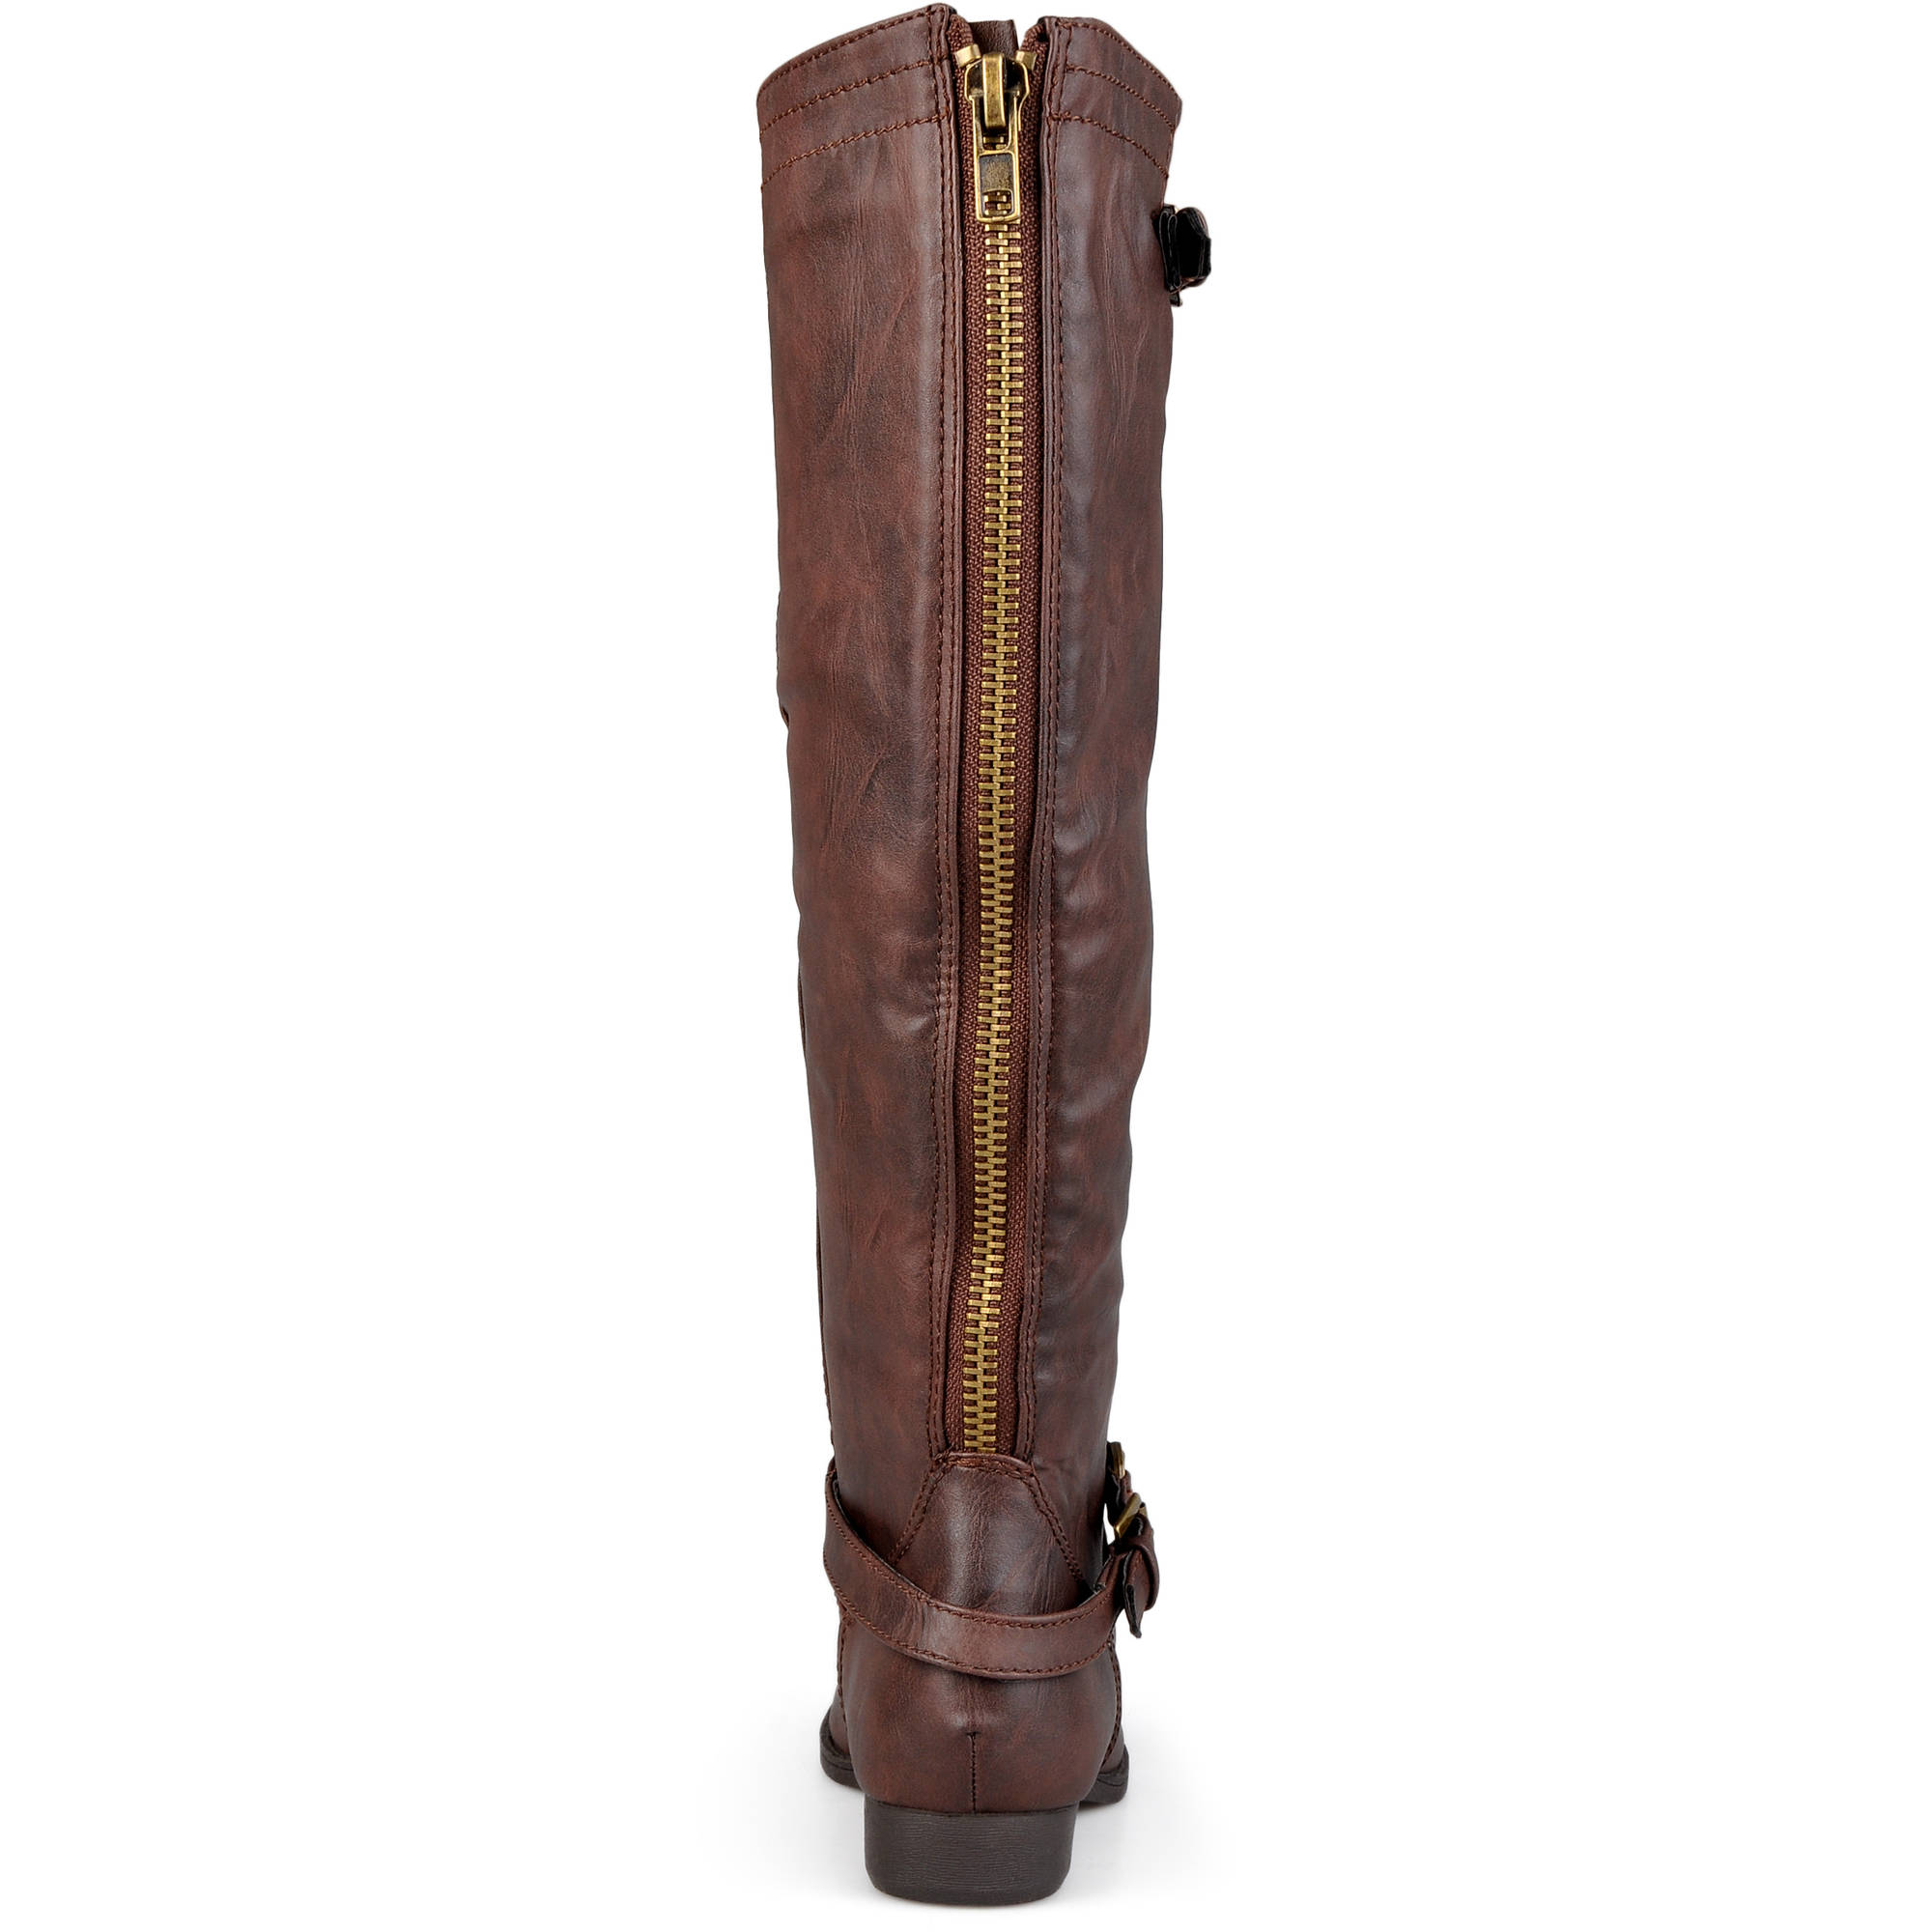 Women's Zipper Back Tall Boots - image 3 of 3